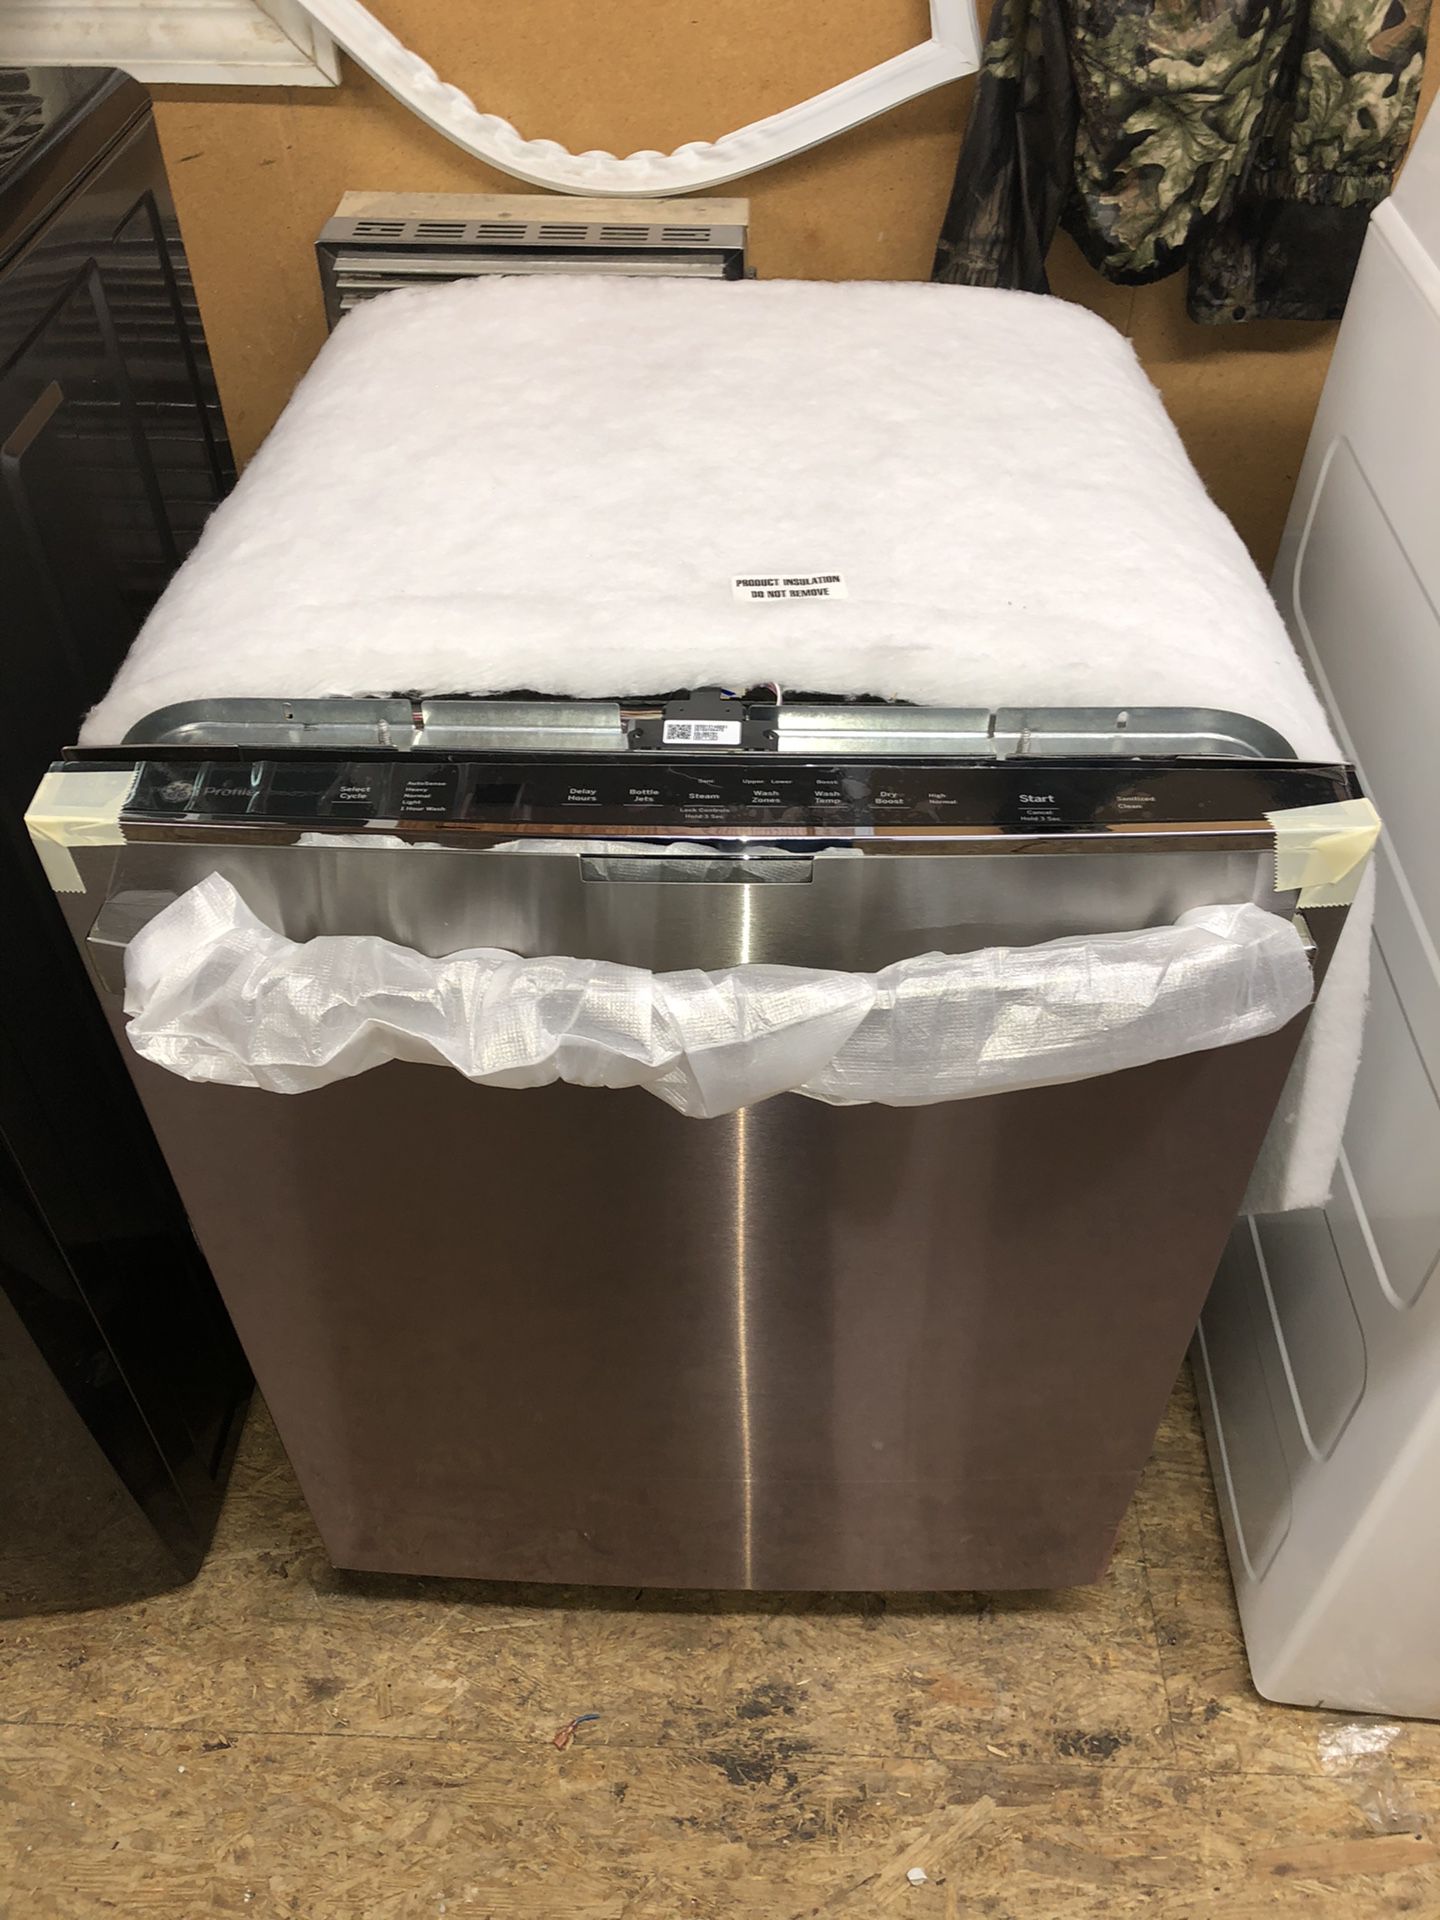 New GE Profile Stainless dishwasher